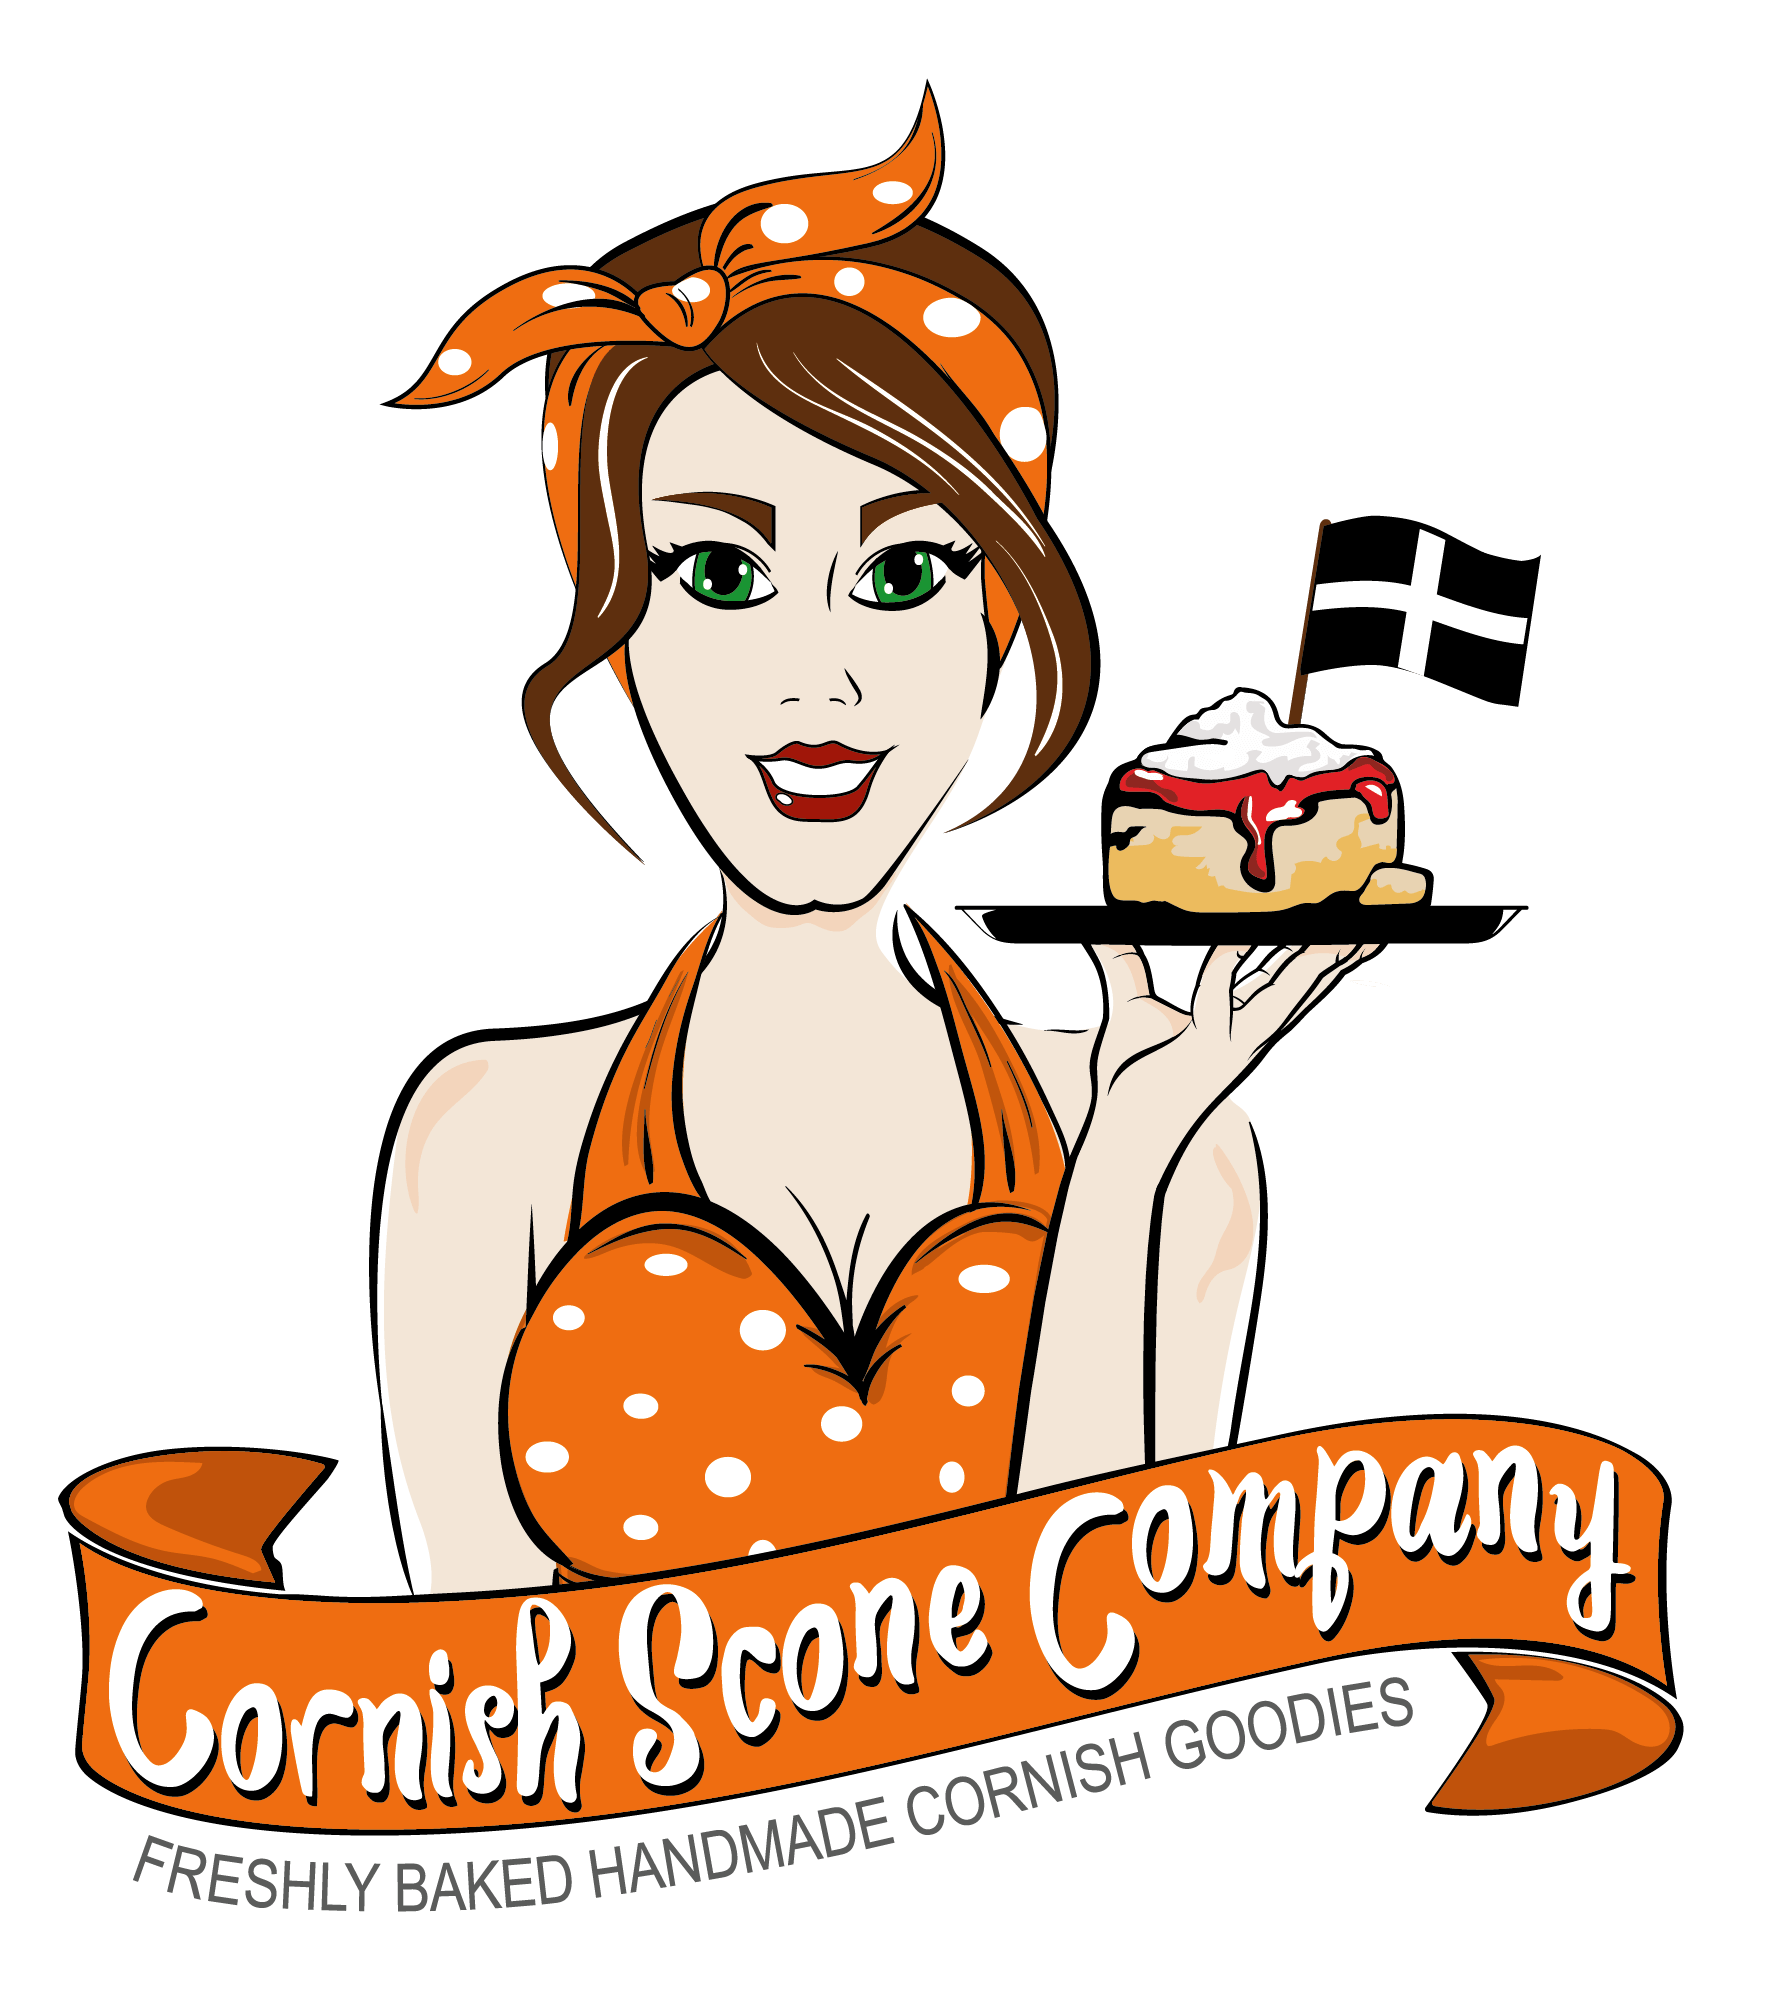 Cornish scone company logo